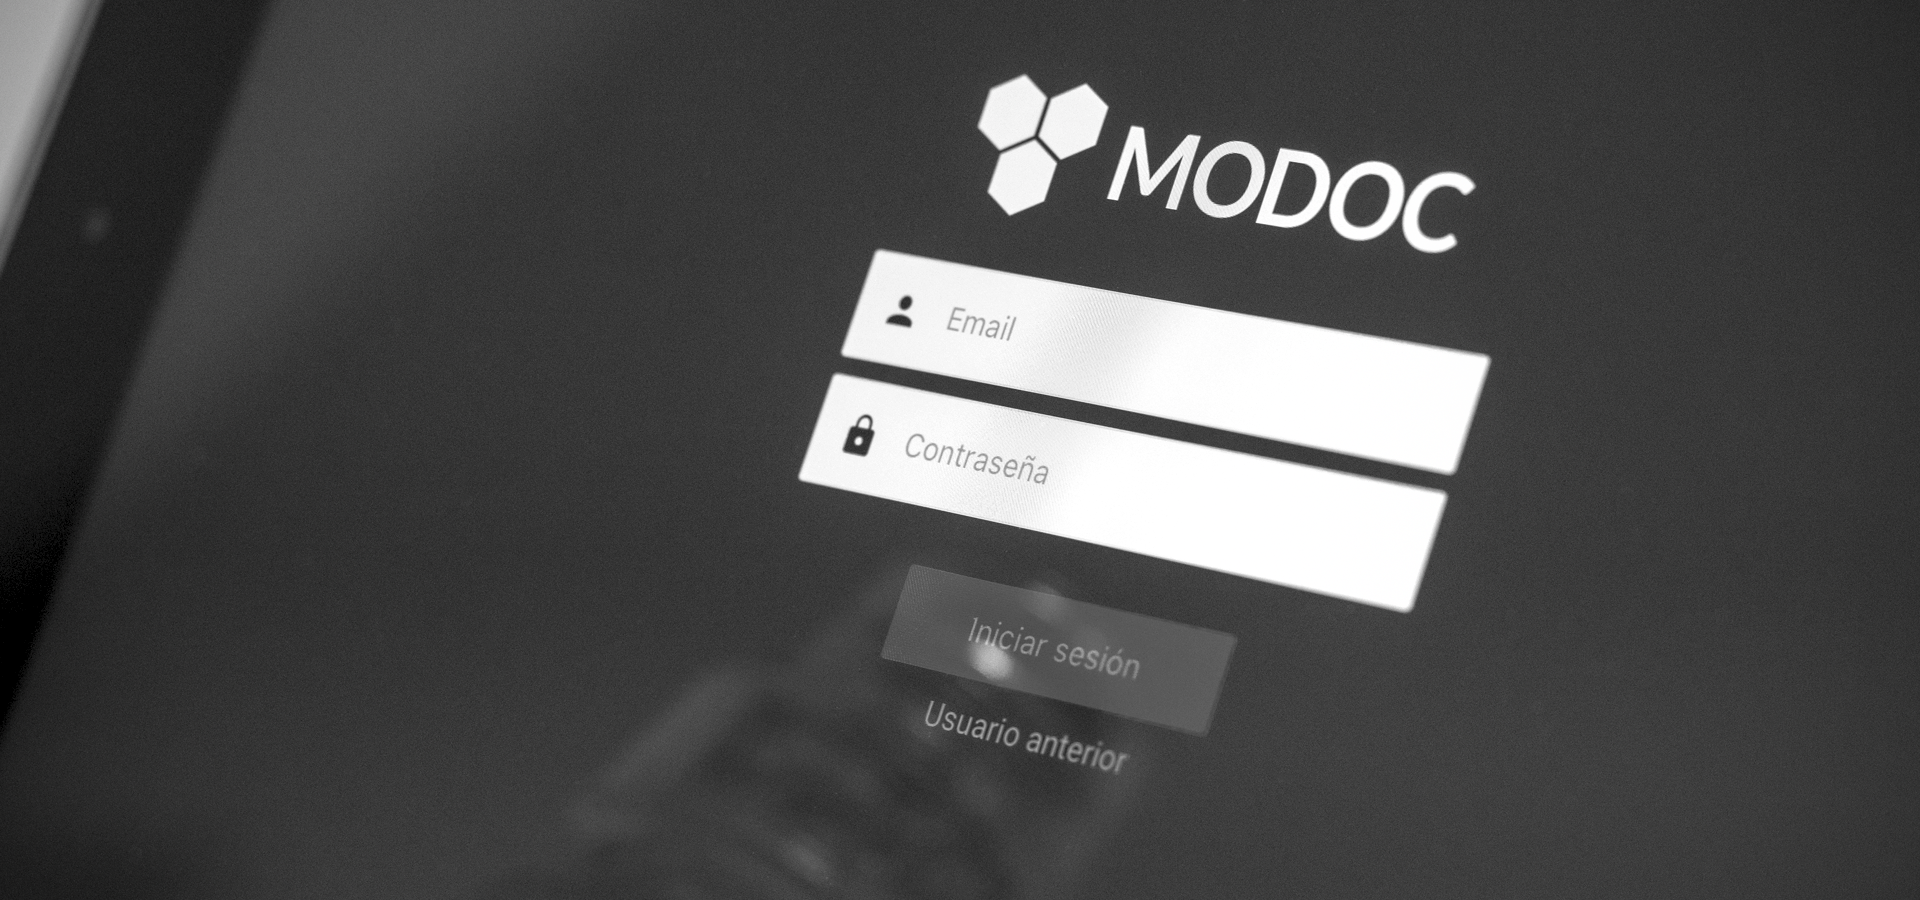 Mobile Doping Controls (MODOC)